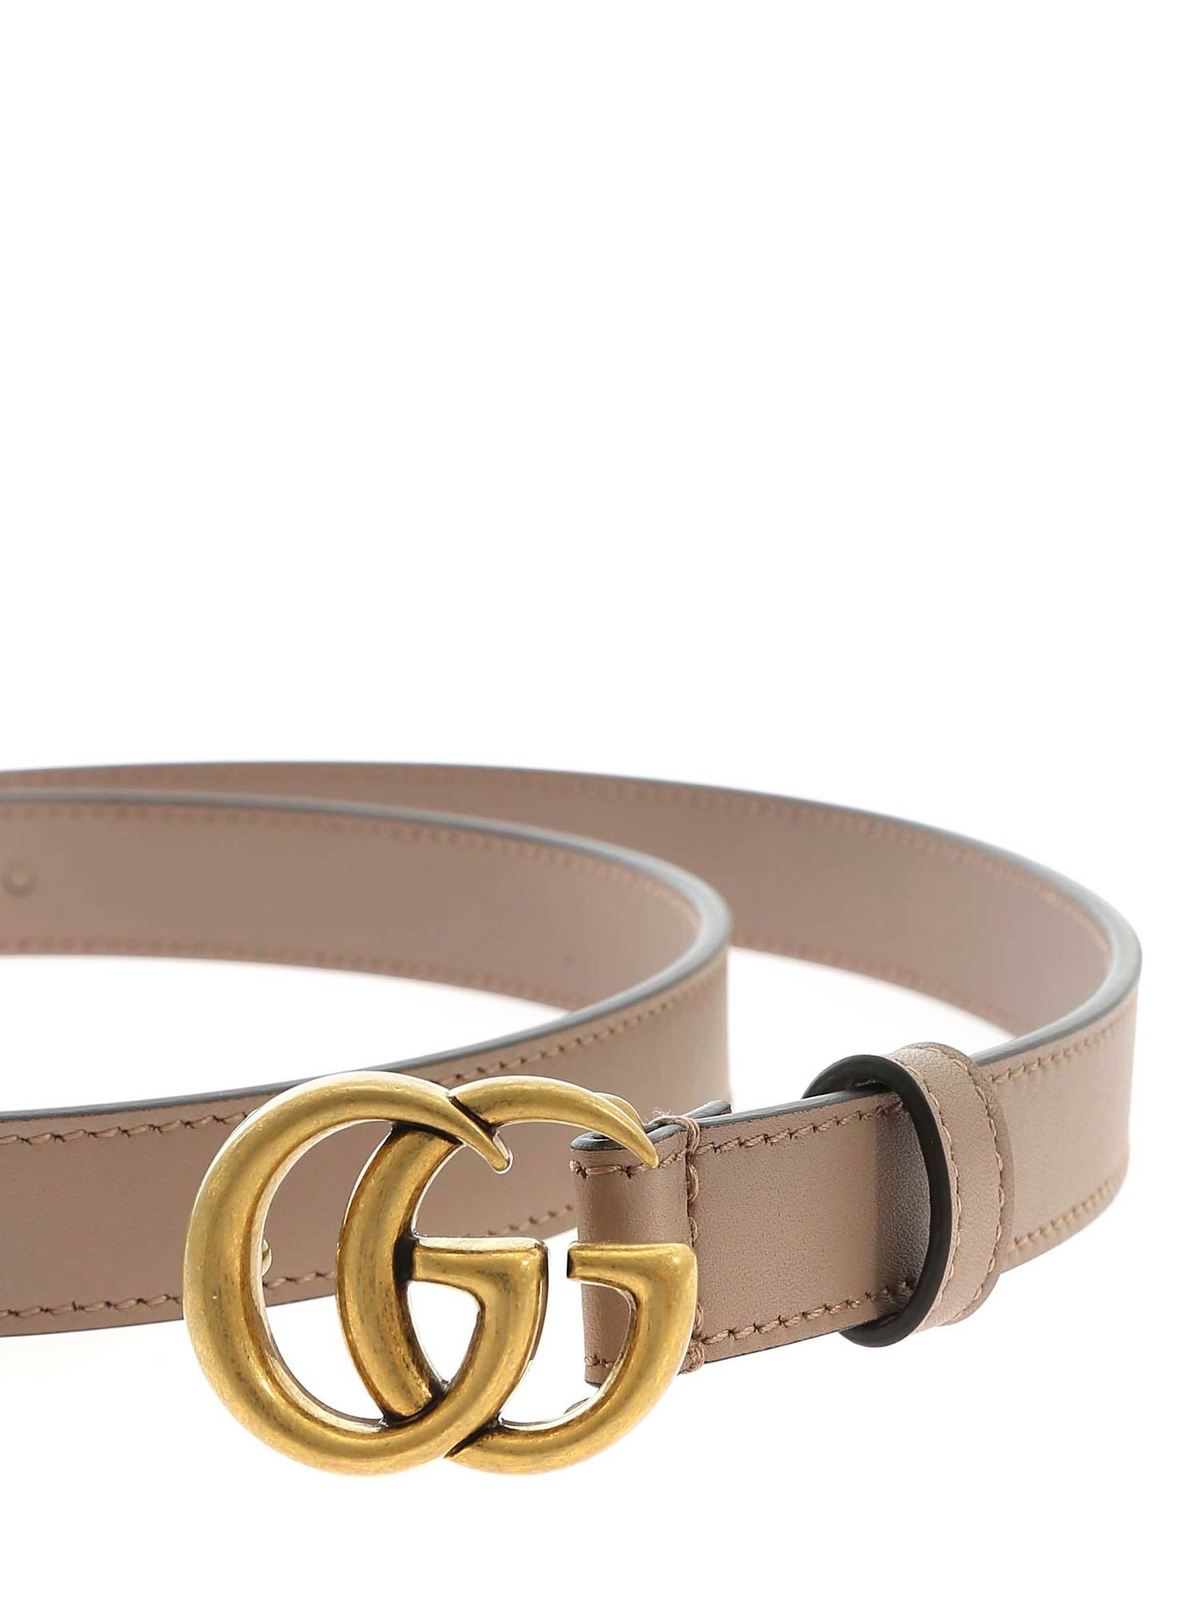 Belts Gucci - Double G buckle belt in dove grey color - 409417AP00T5729